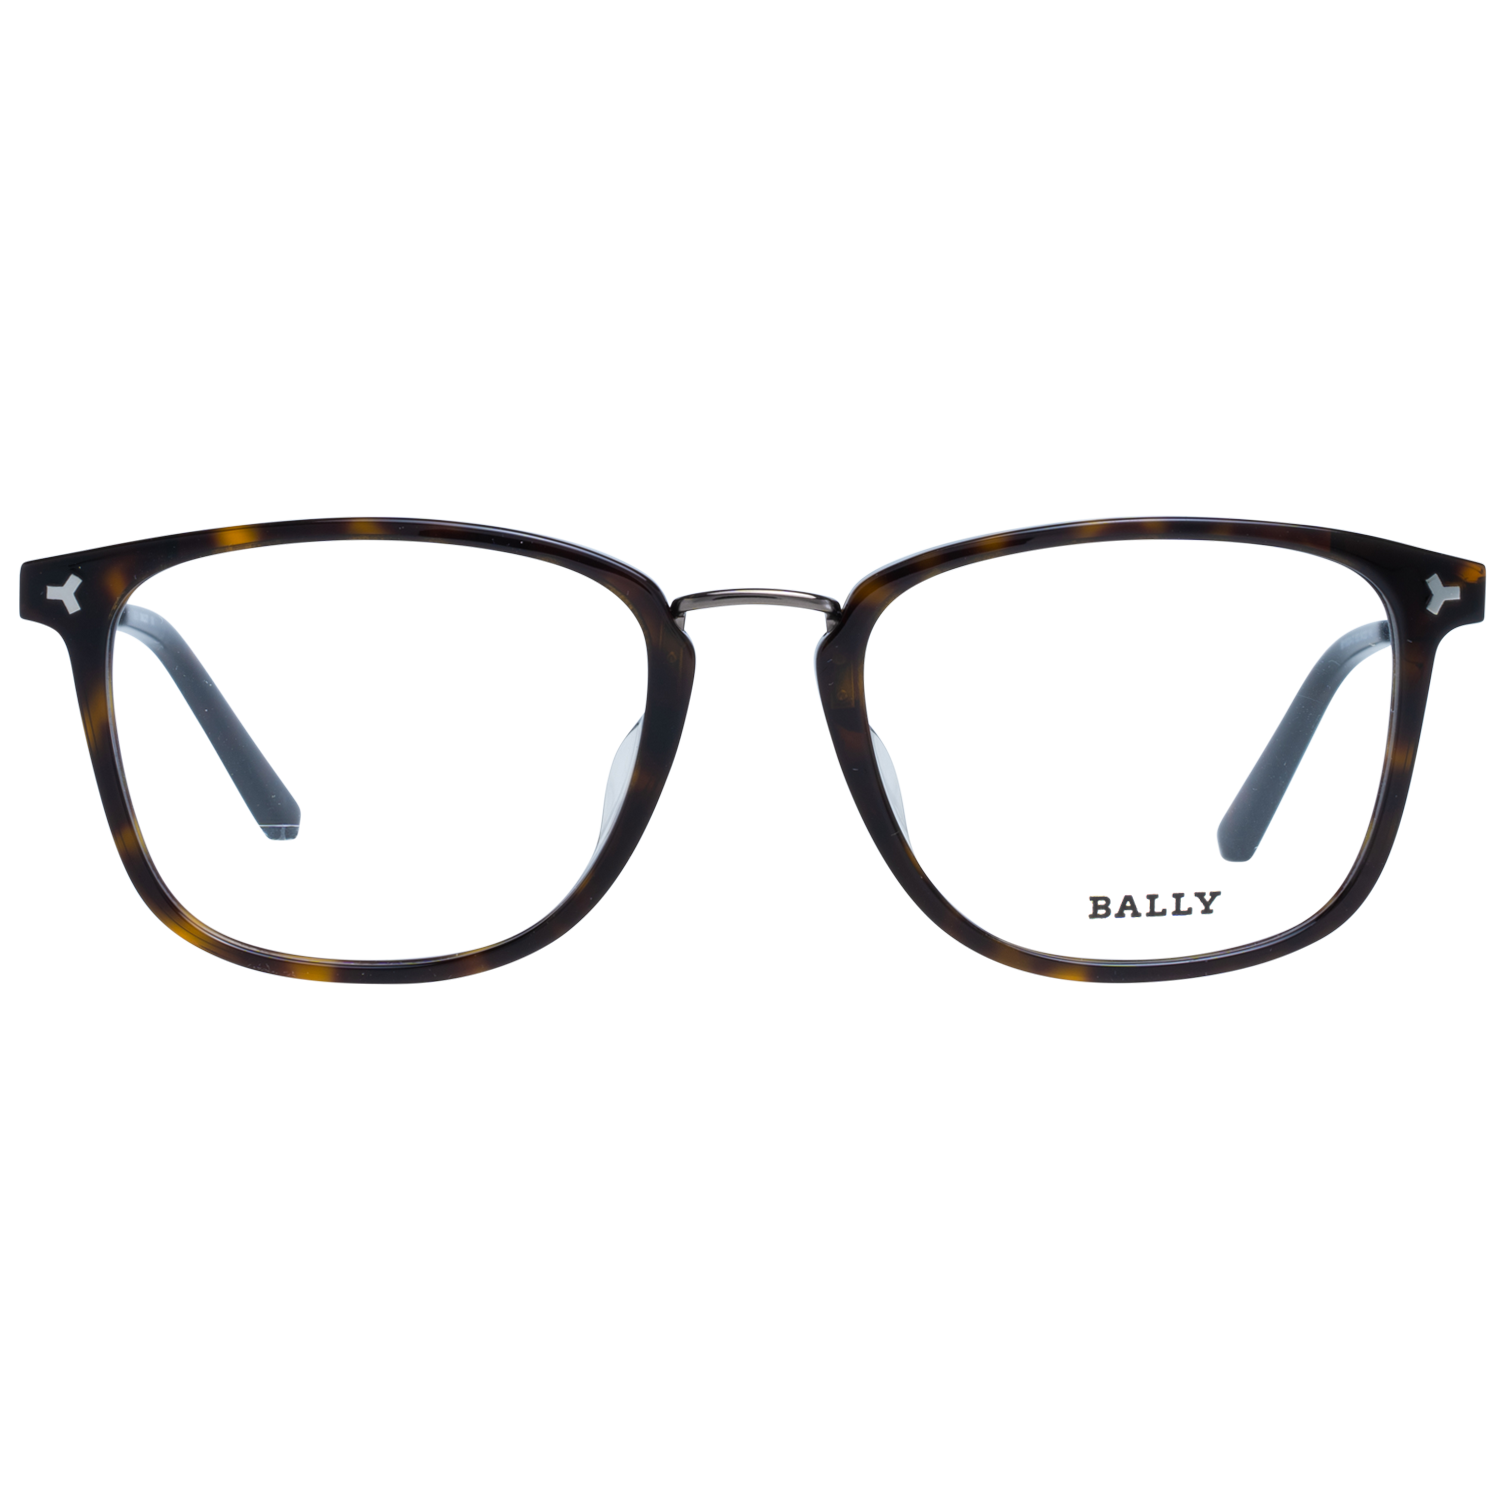 Bally Optical Frame Bally Eyeglasses Frames BY5024-D 052 54 Eyeglasses Eyewear UK USA Australia 